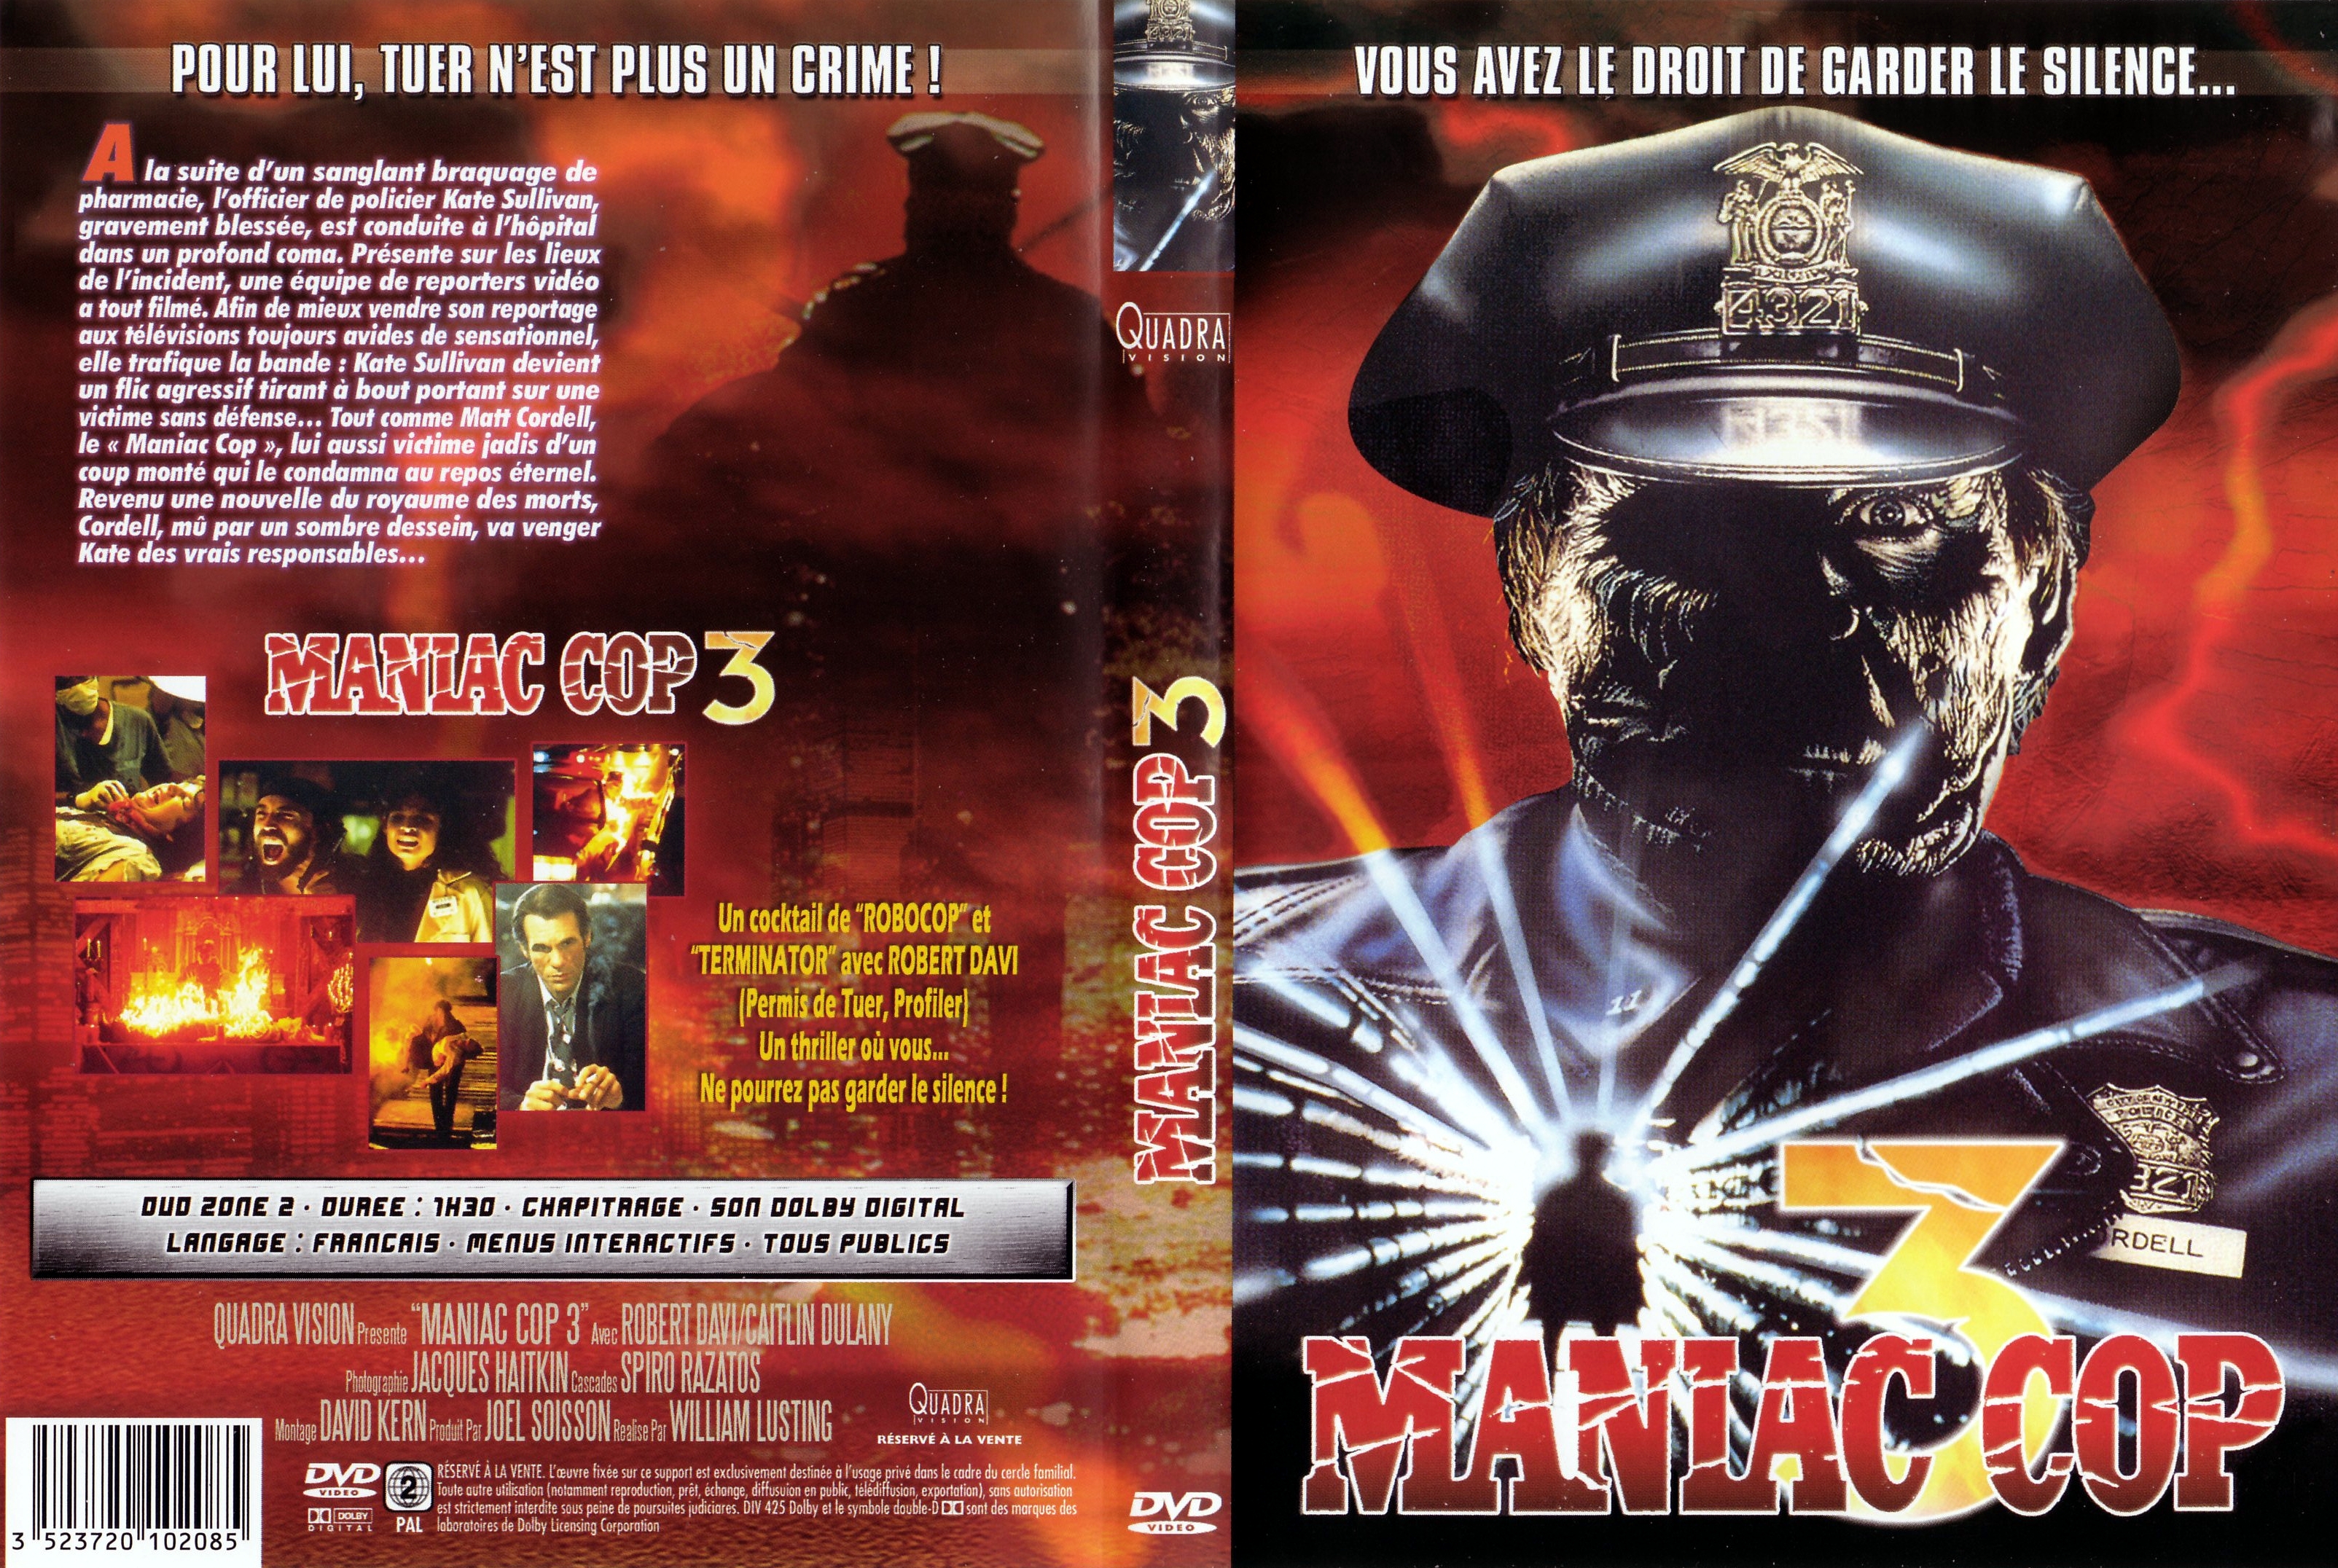 Jaquette DVD Maniac cop 3